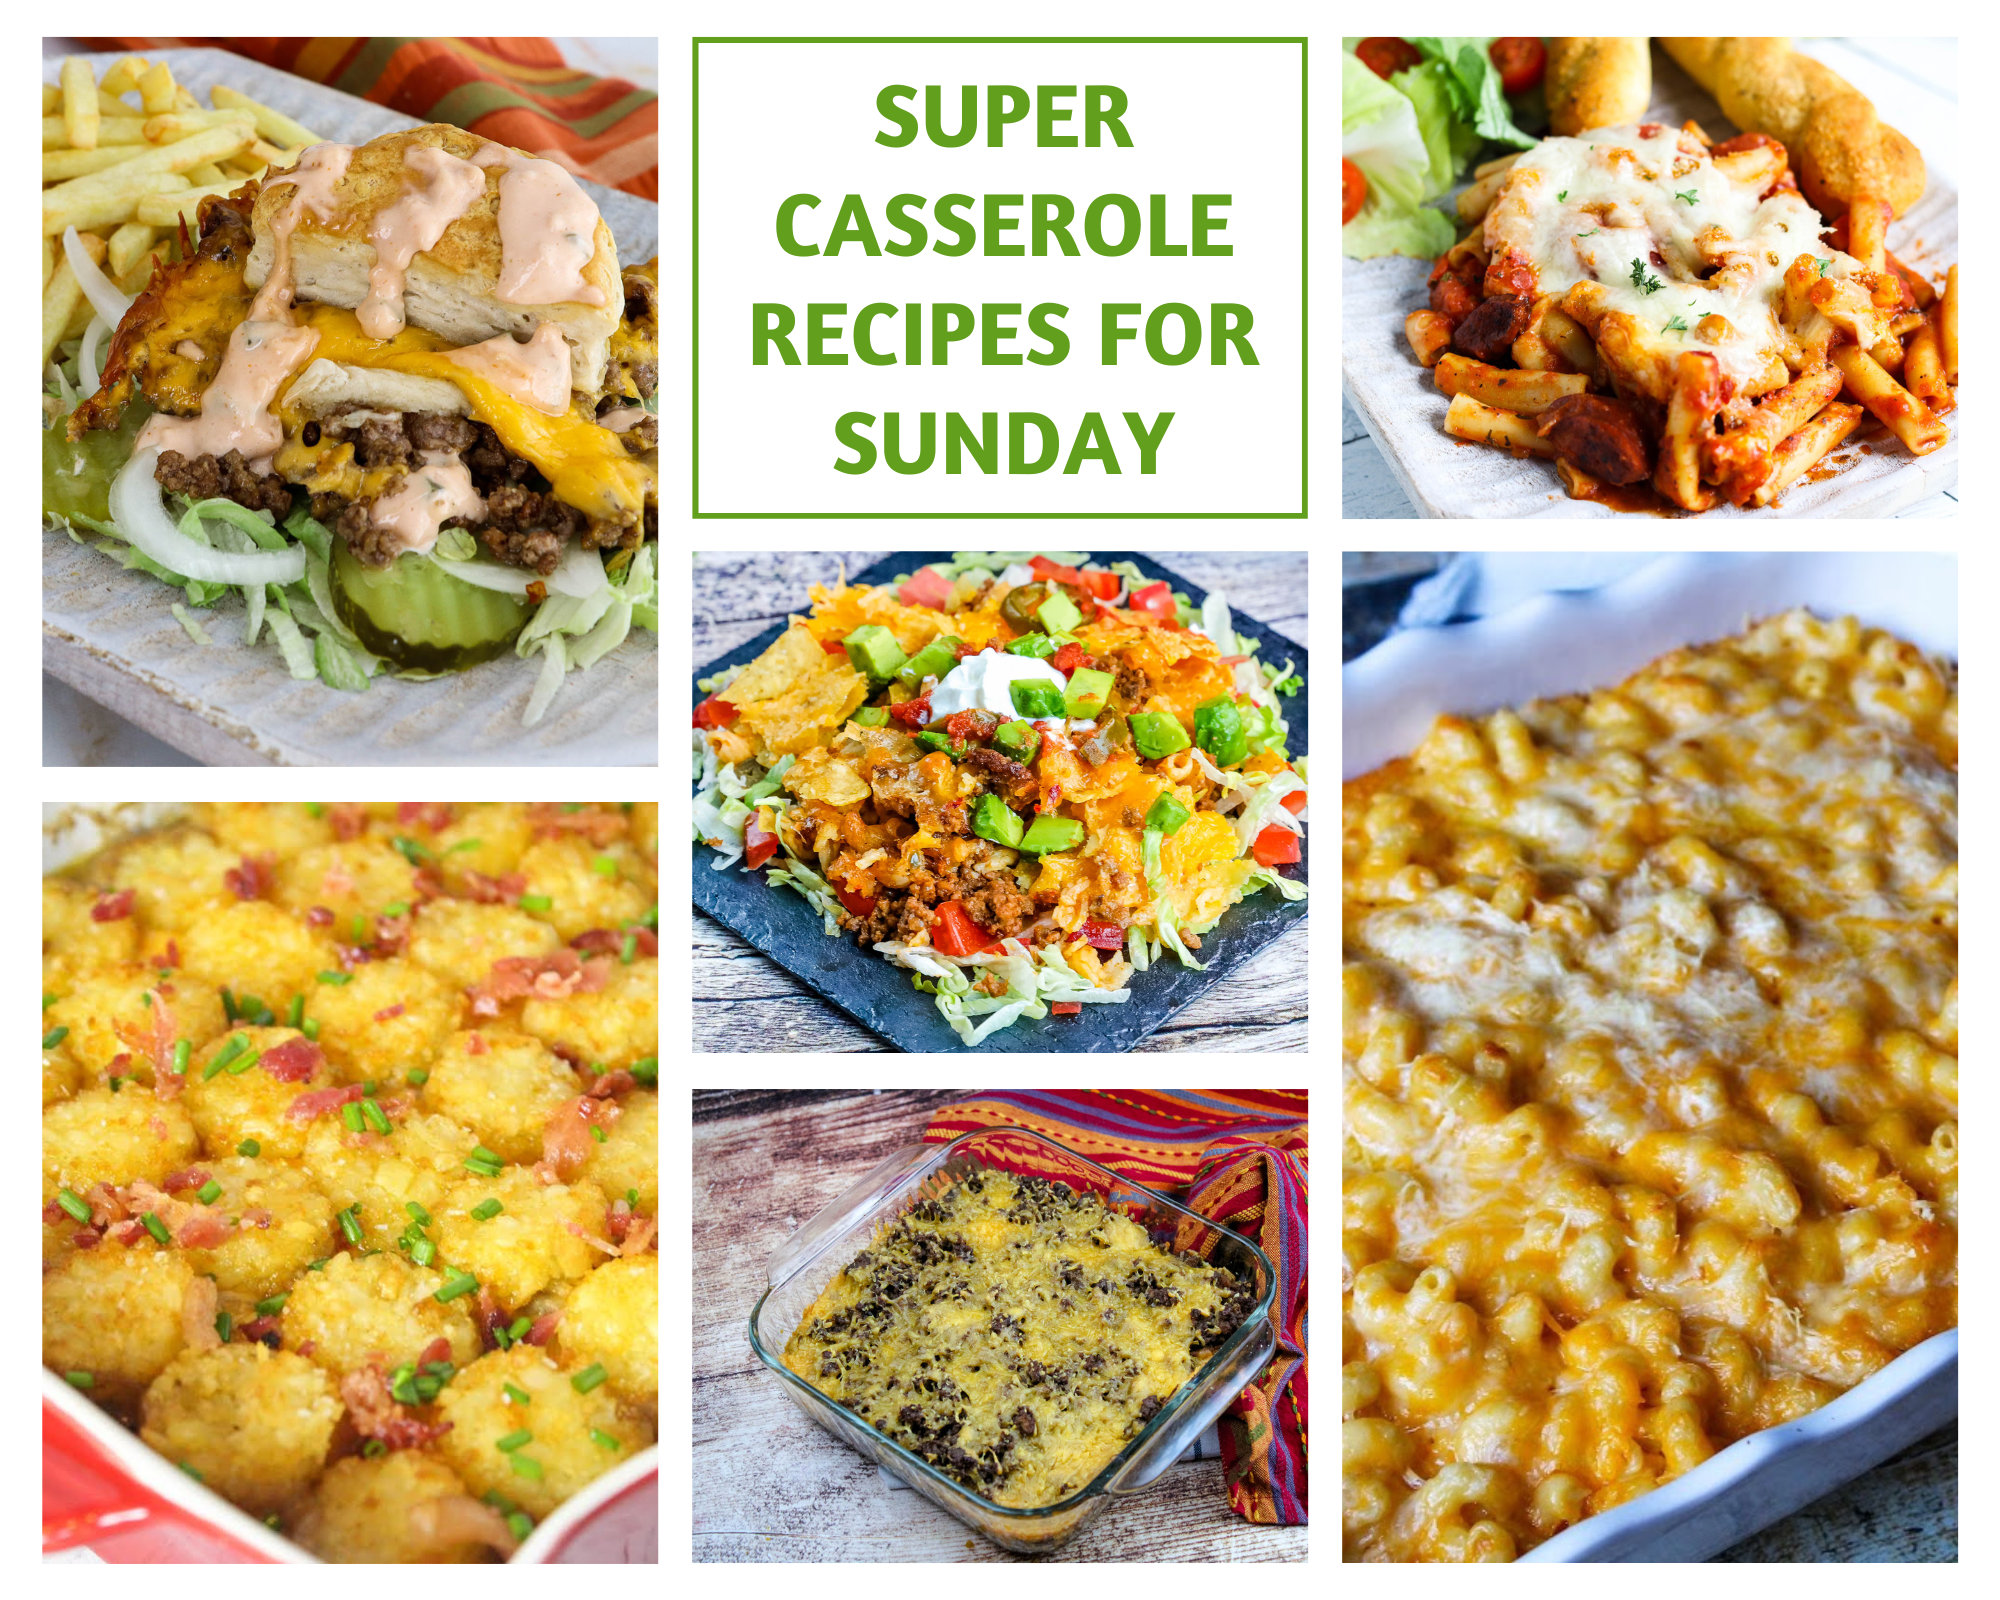 Super Casserole Recipes for Sunday